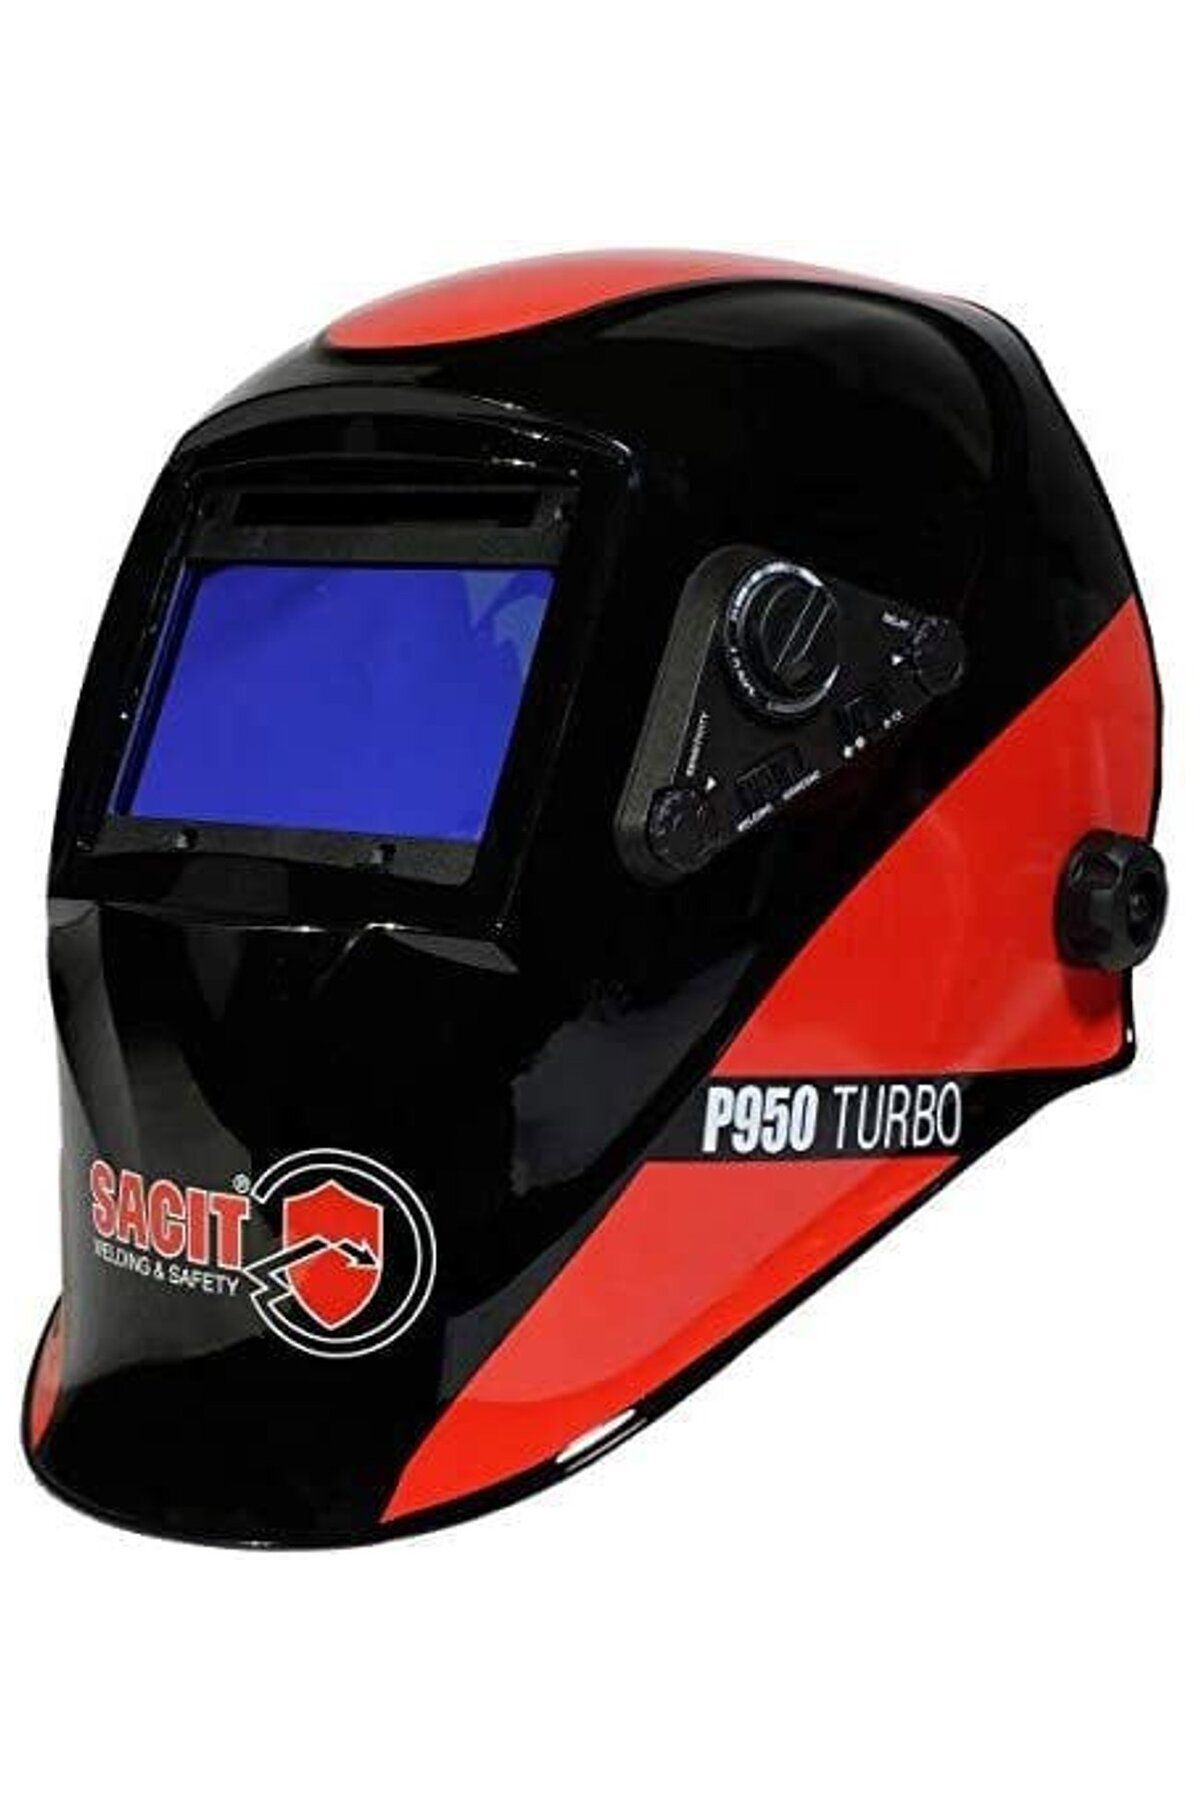 SACİT Sacit P950 Turbo Kolormatik Otomatik Kararan Kaynak Maskesi